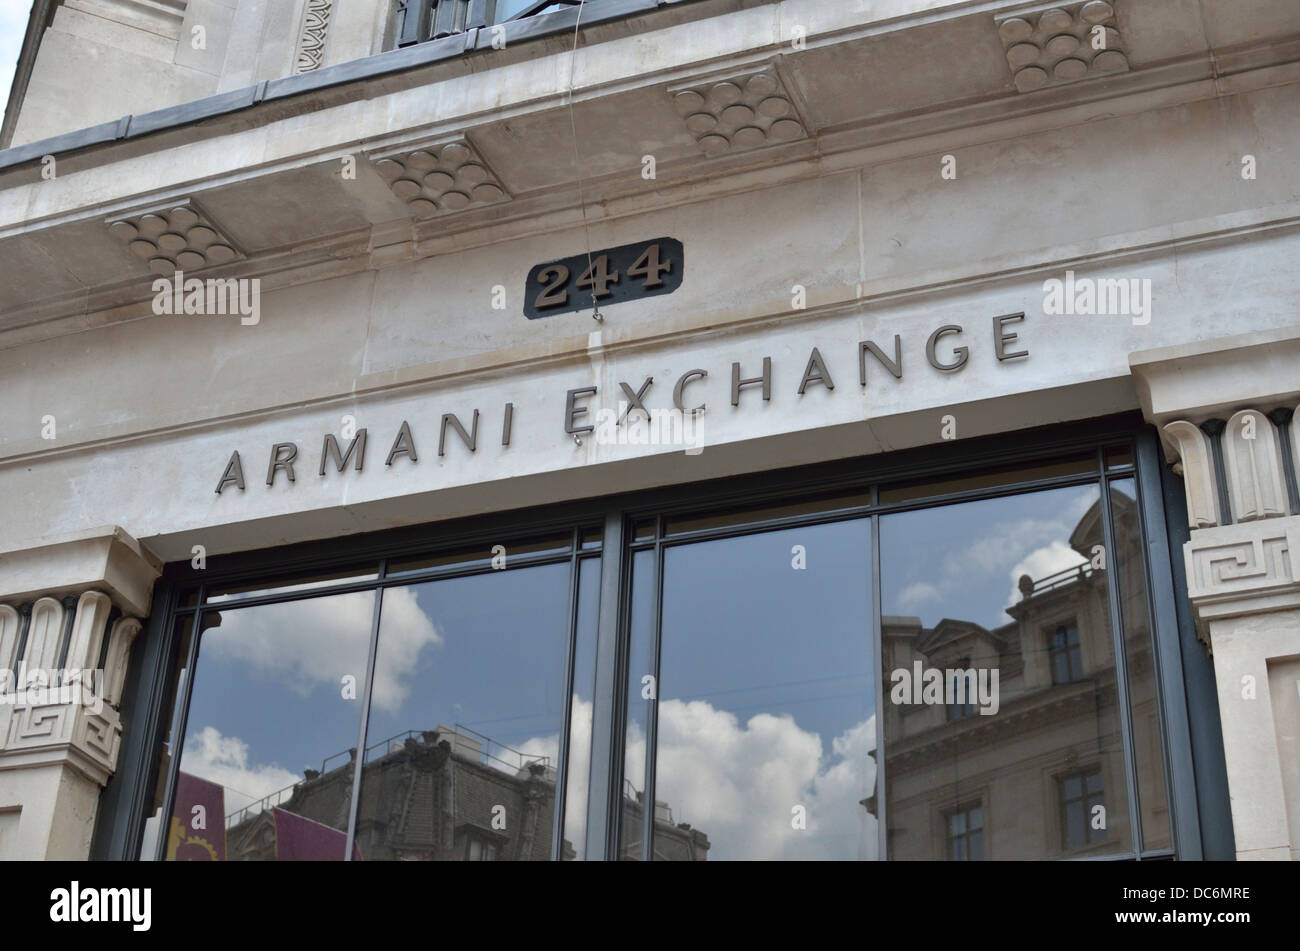 armani exchange oxford street - 59% OFF 